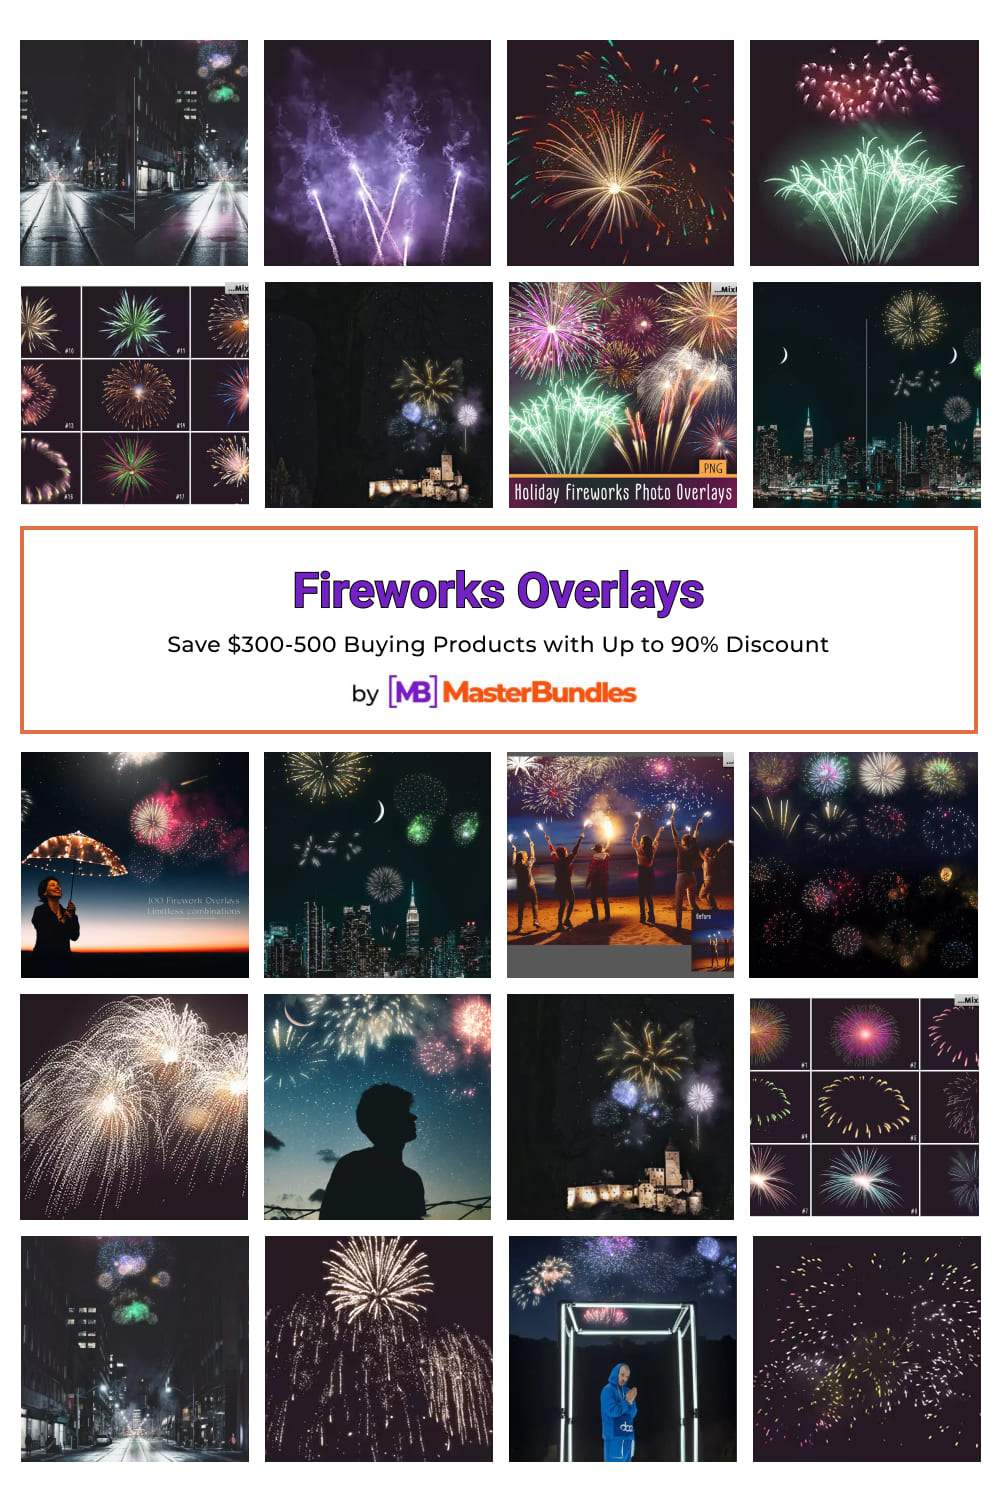 Fireworks Overlays Pinterest image.